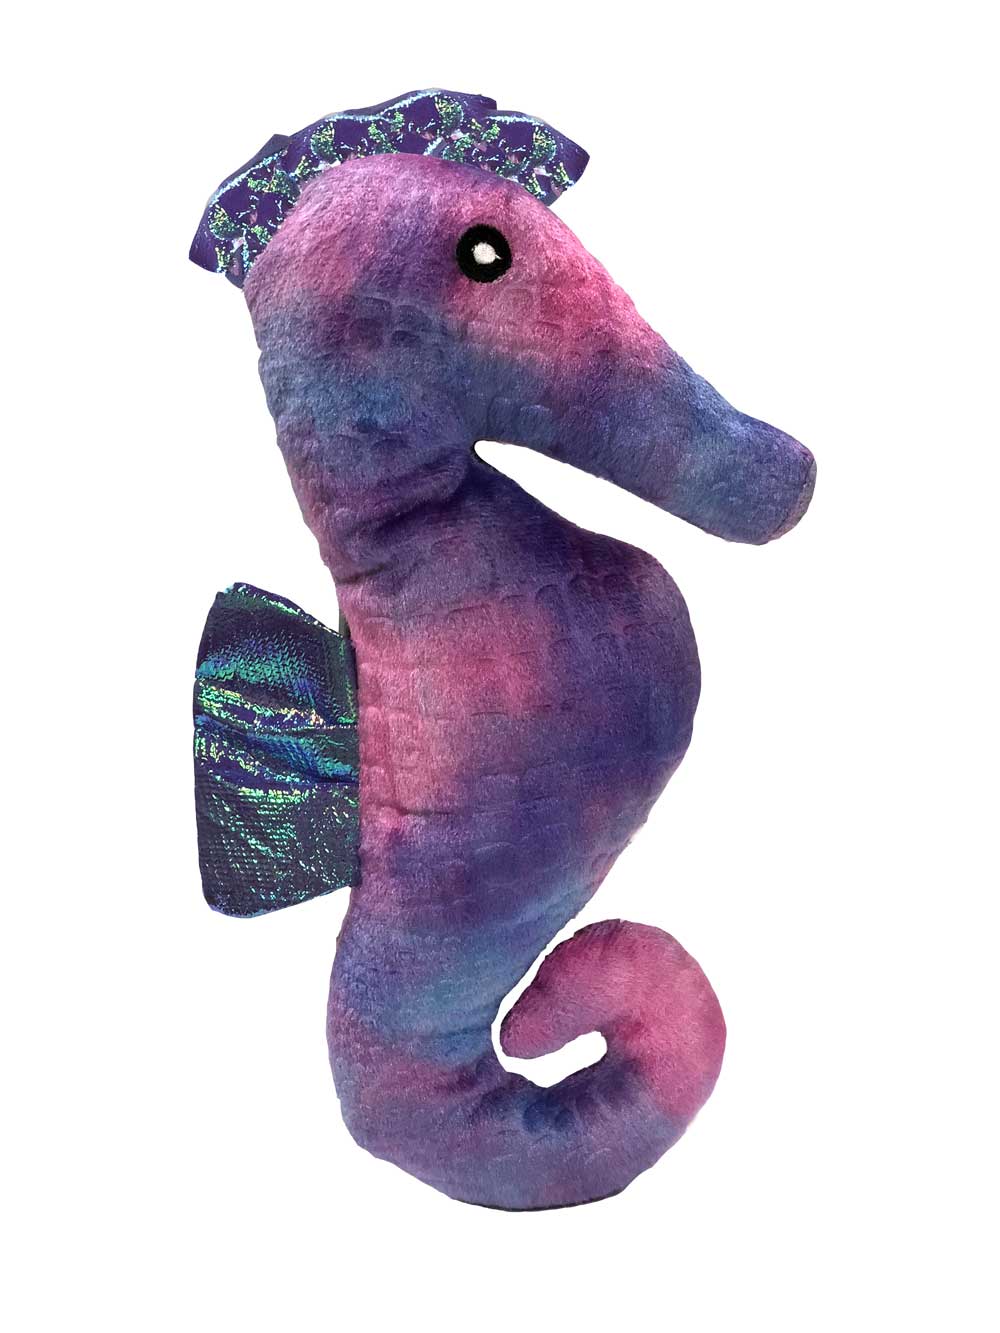 Patchwork Dog Toy - Tie Dye Seahorse